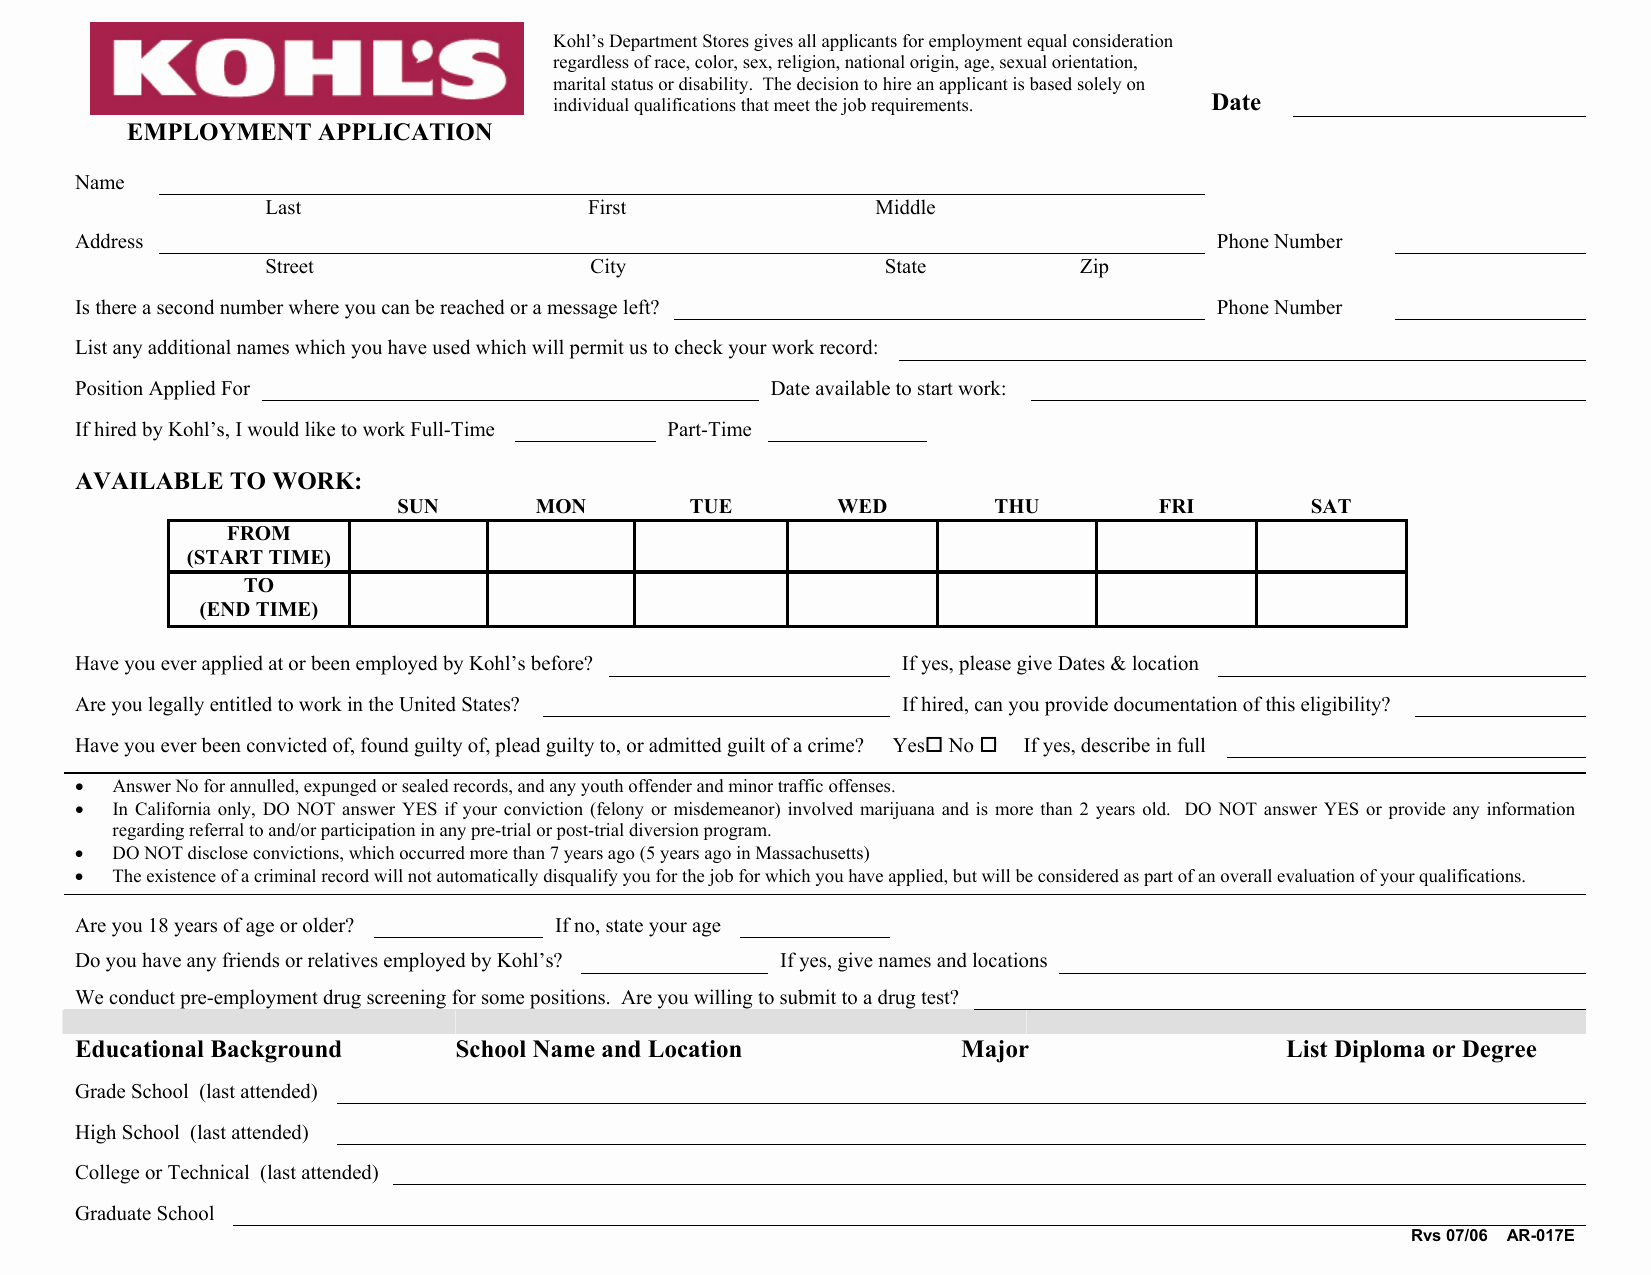 Jobs Application form Pdf New Kohls Employment Application